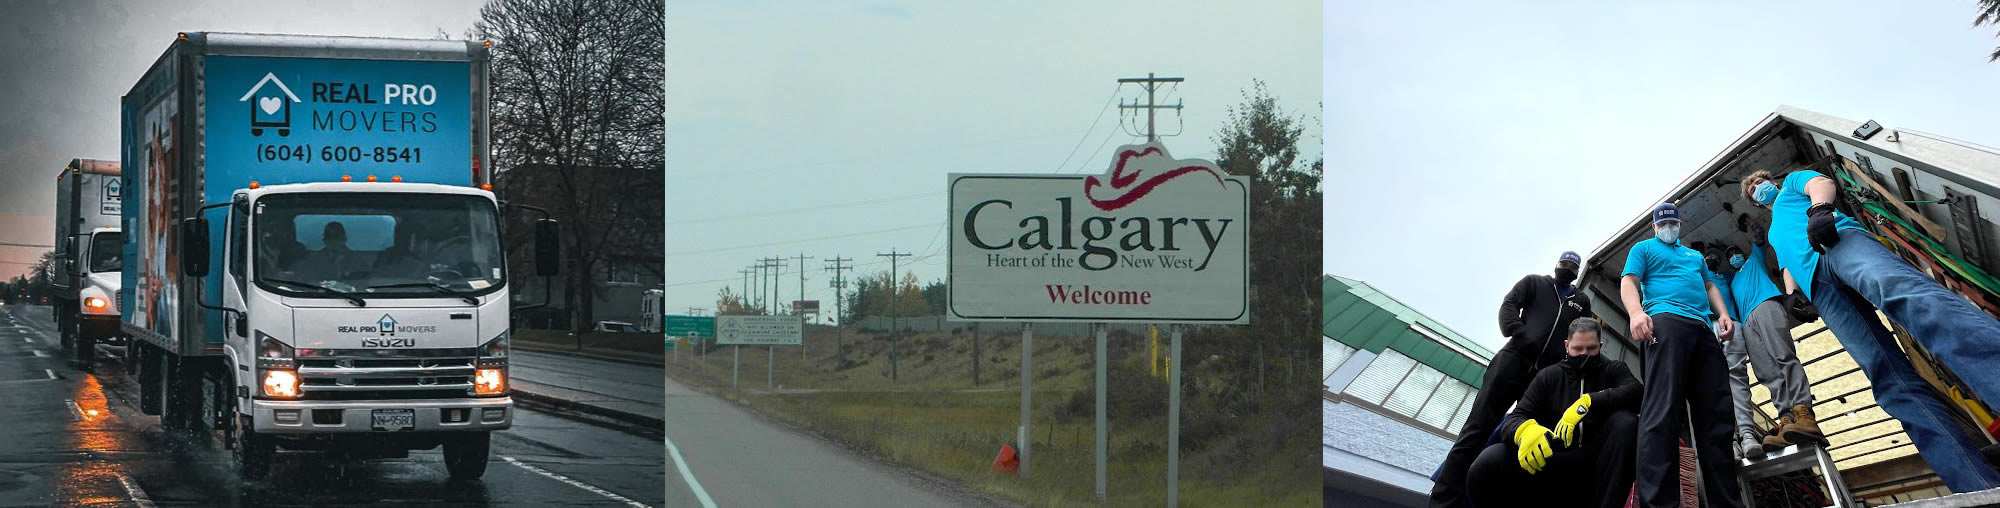 Real provers moving company in Calgary Alberta